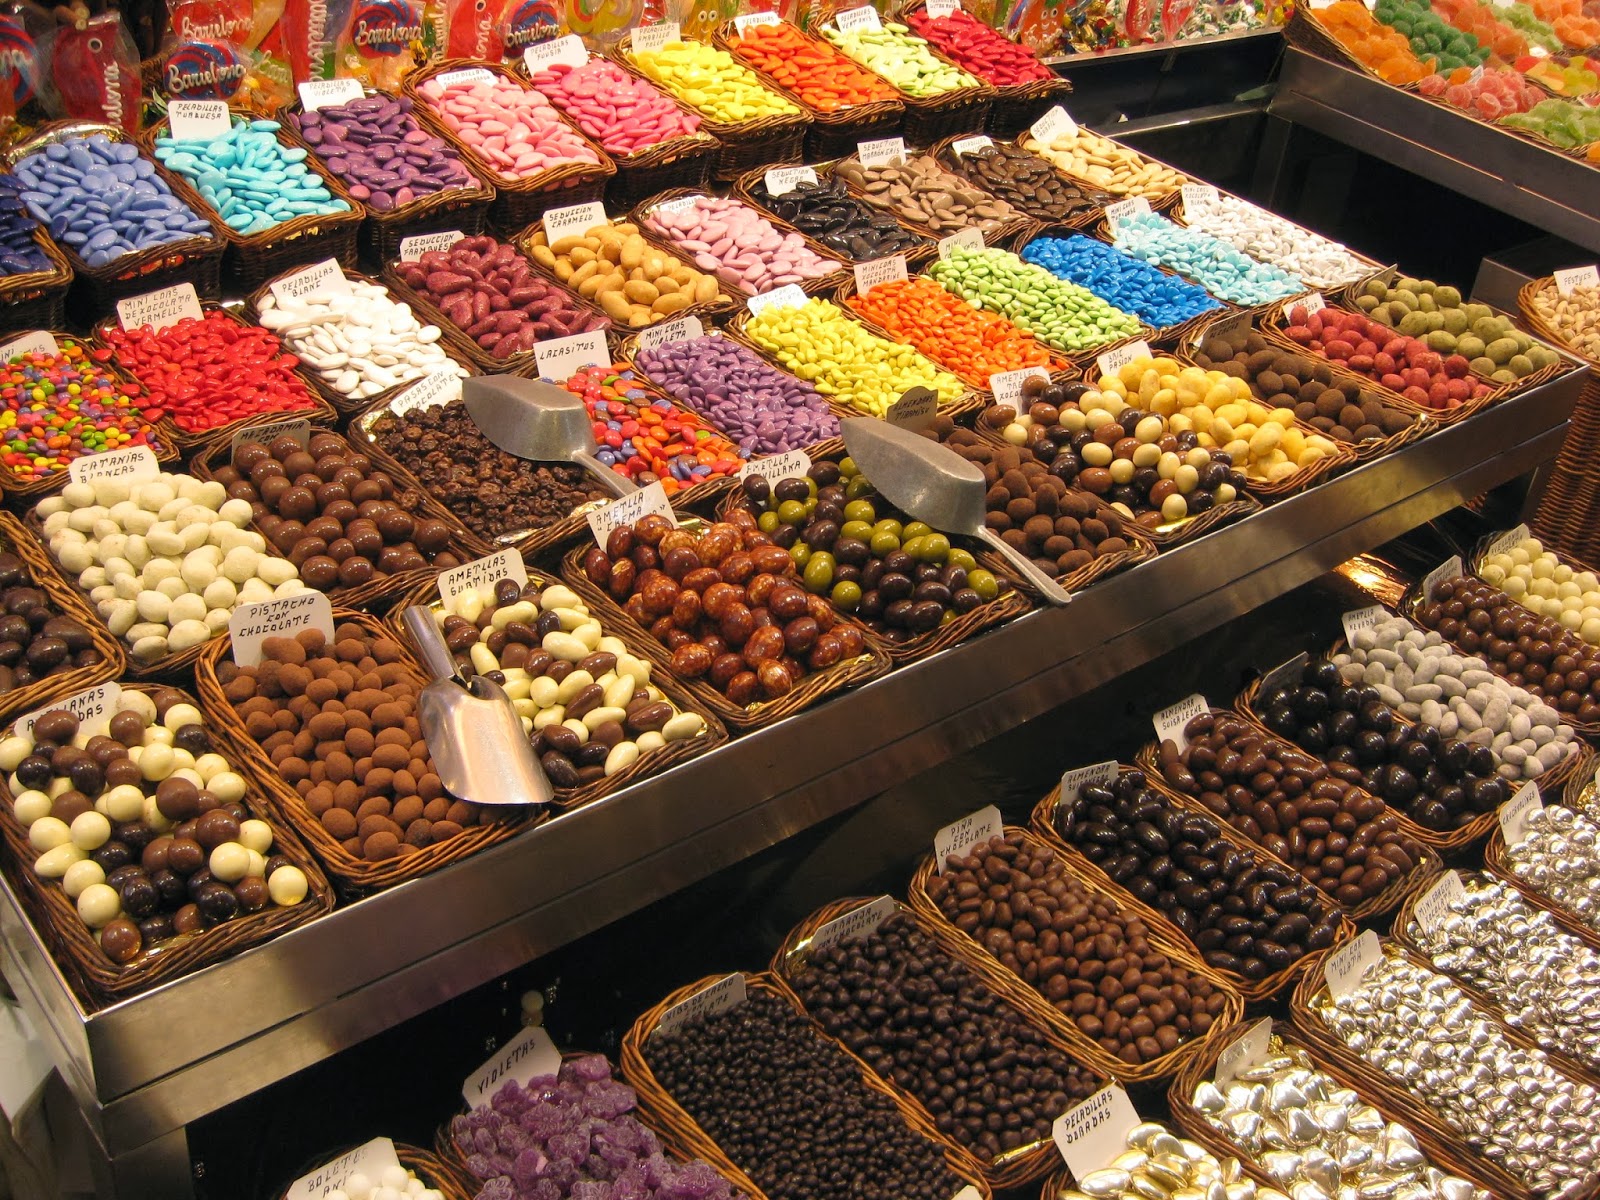 Barcelona - chocolate and candy stall at La Boqueria market